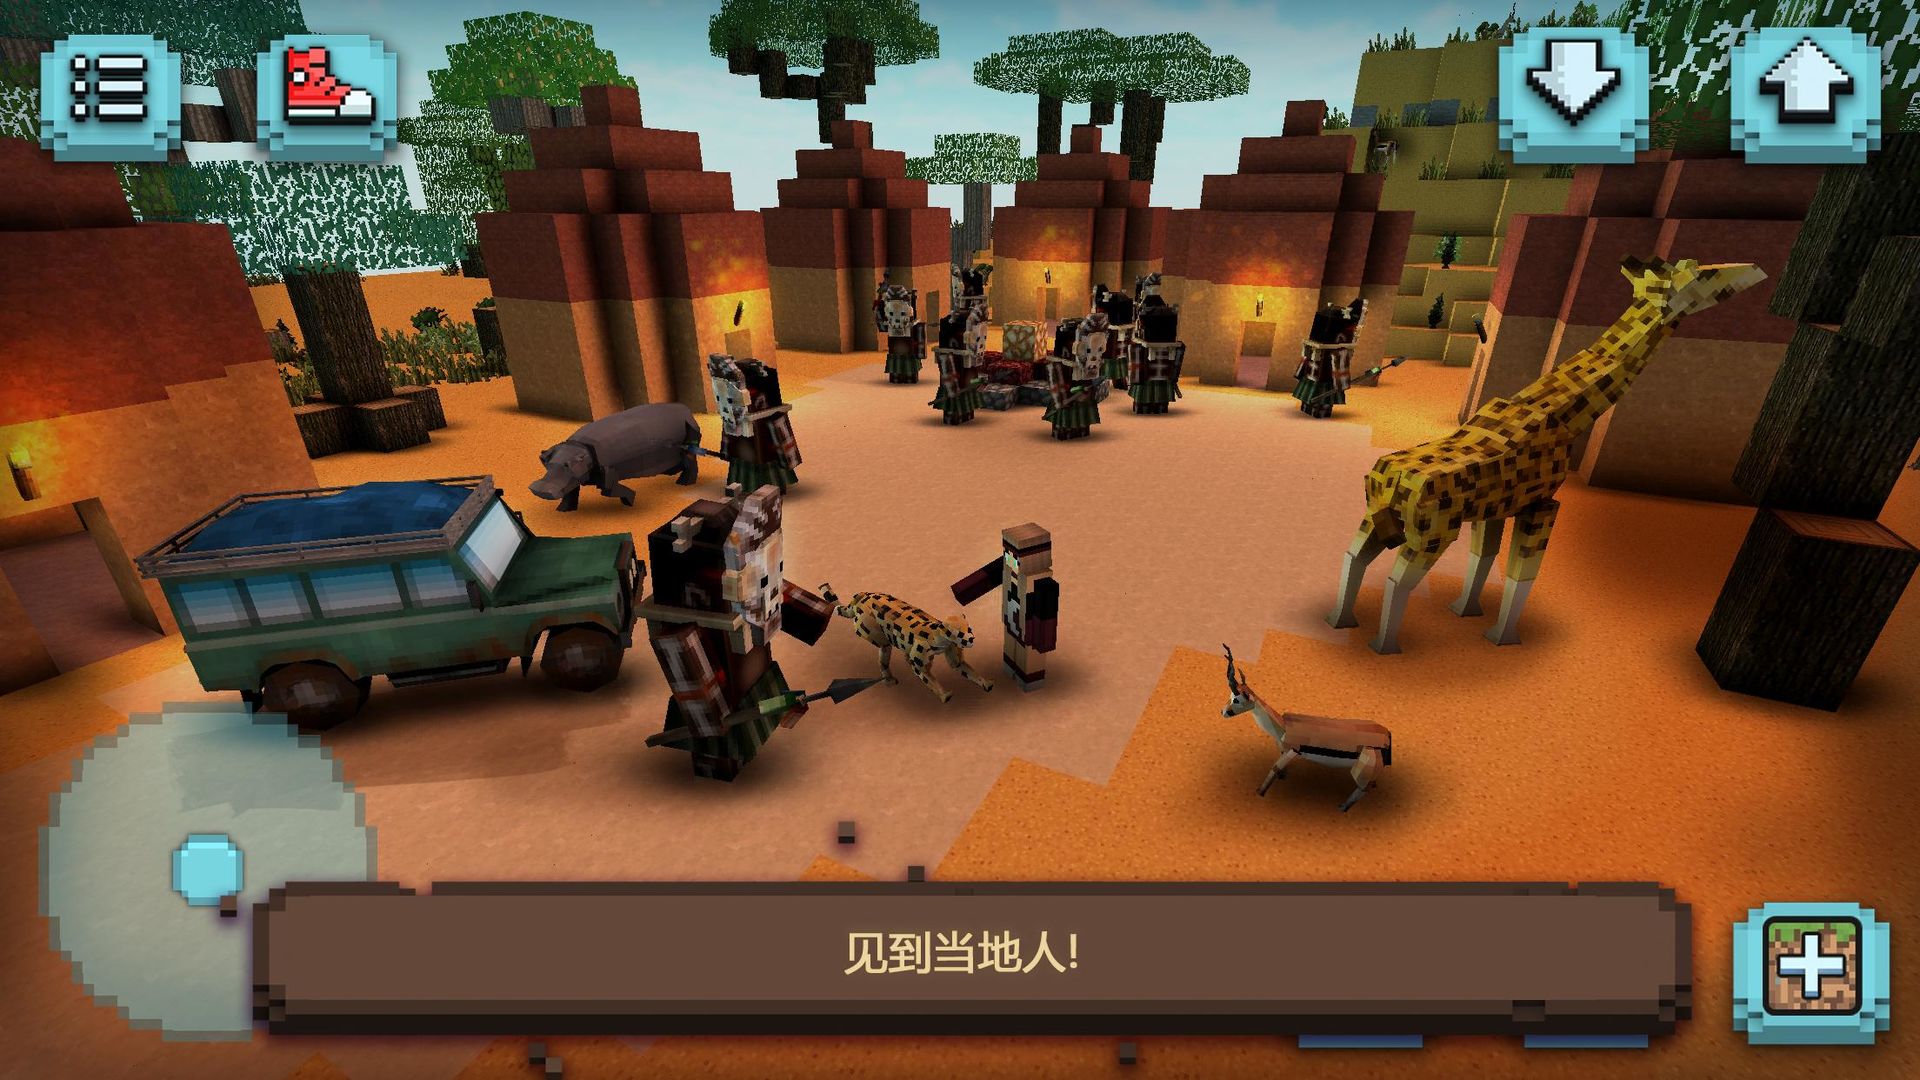 Screenshot of Savanna Safari Craft: Animals